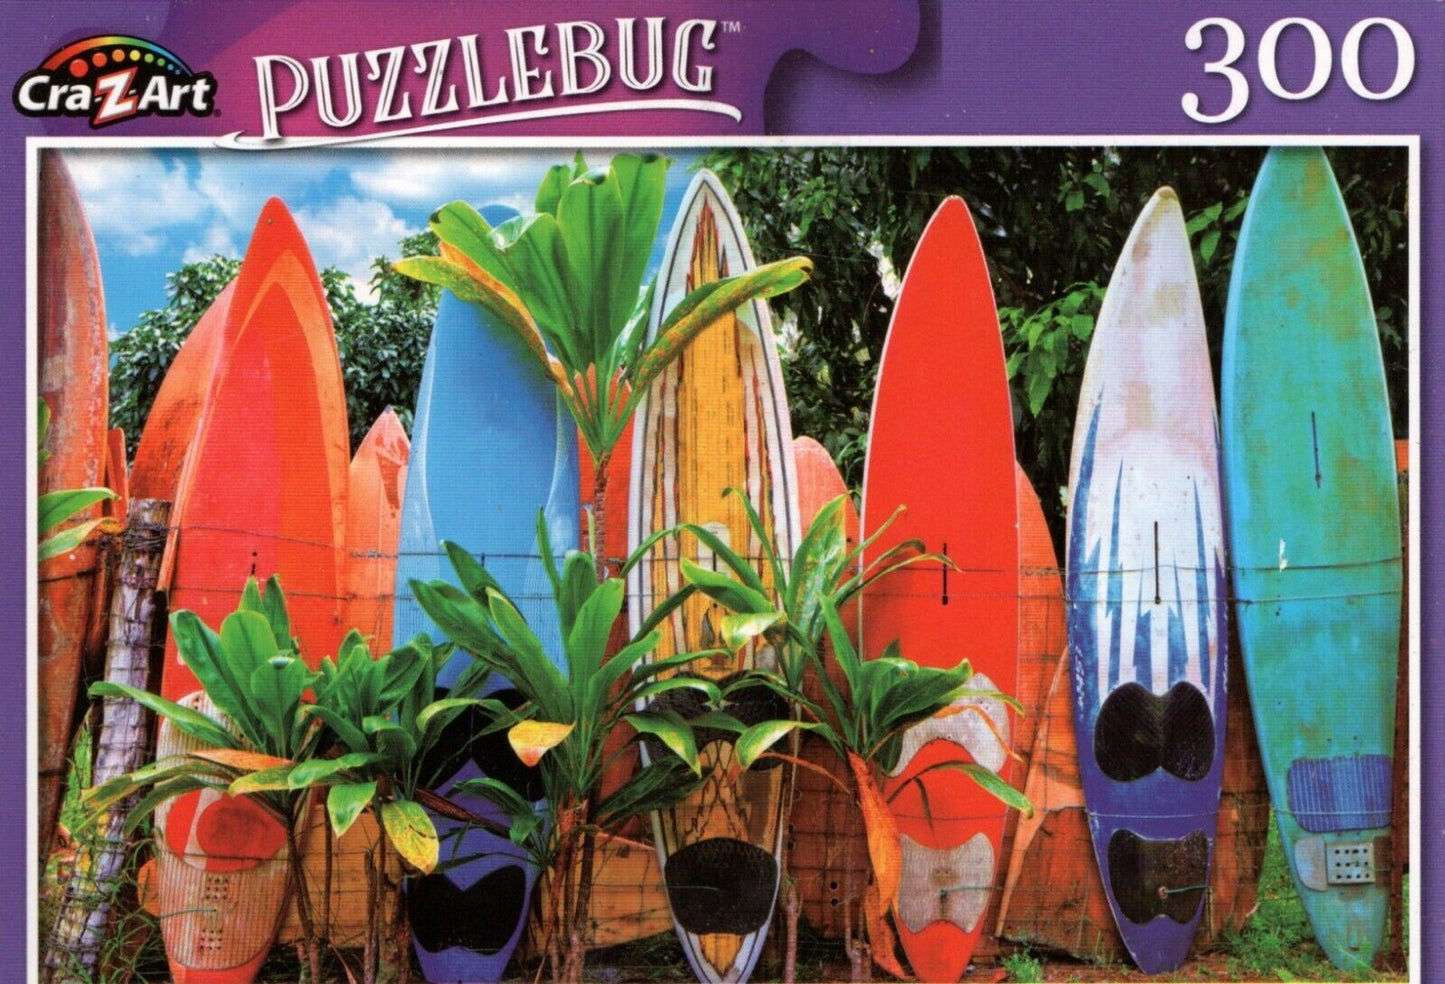 Surfboards Fence, Maui, HI - 300 Pieces Jigsaw Puzzle